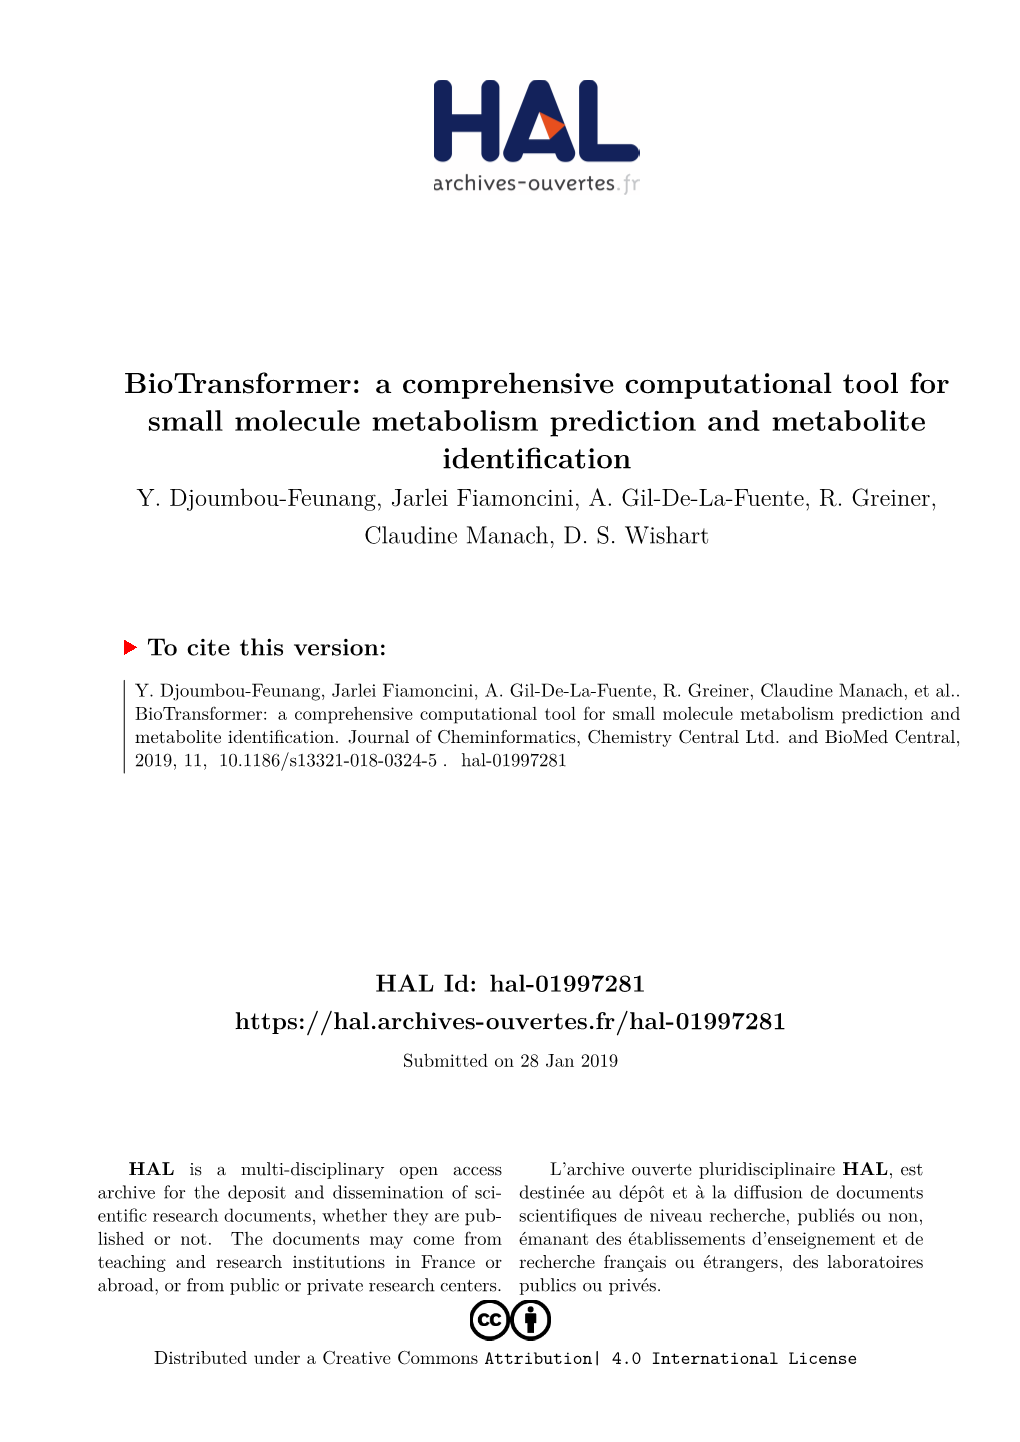 Biotransformer: a Comprehensive Computational Tool for Small Molecule Metabolism Prediction and Metabolite Identification Y